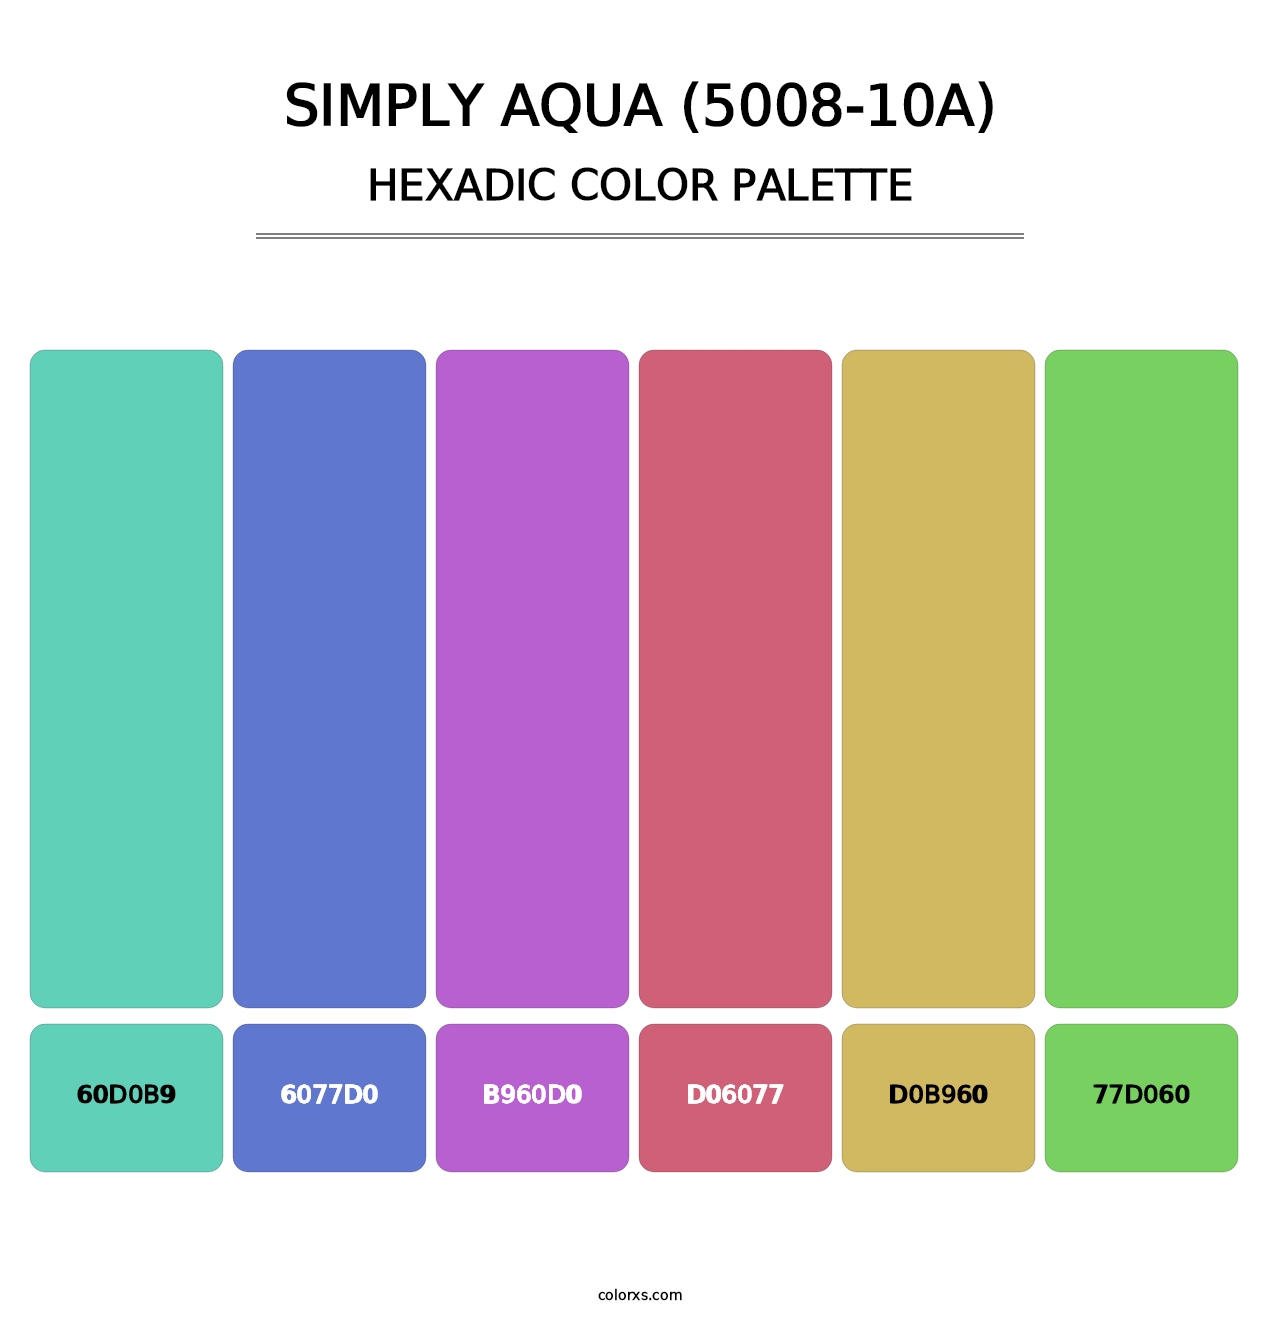 Simply Aqua (5008-10A) - Hexadic Color Palette